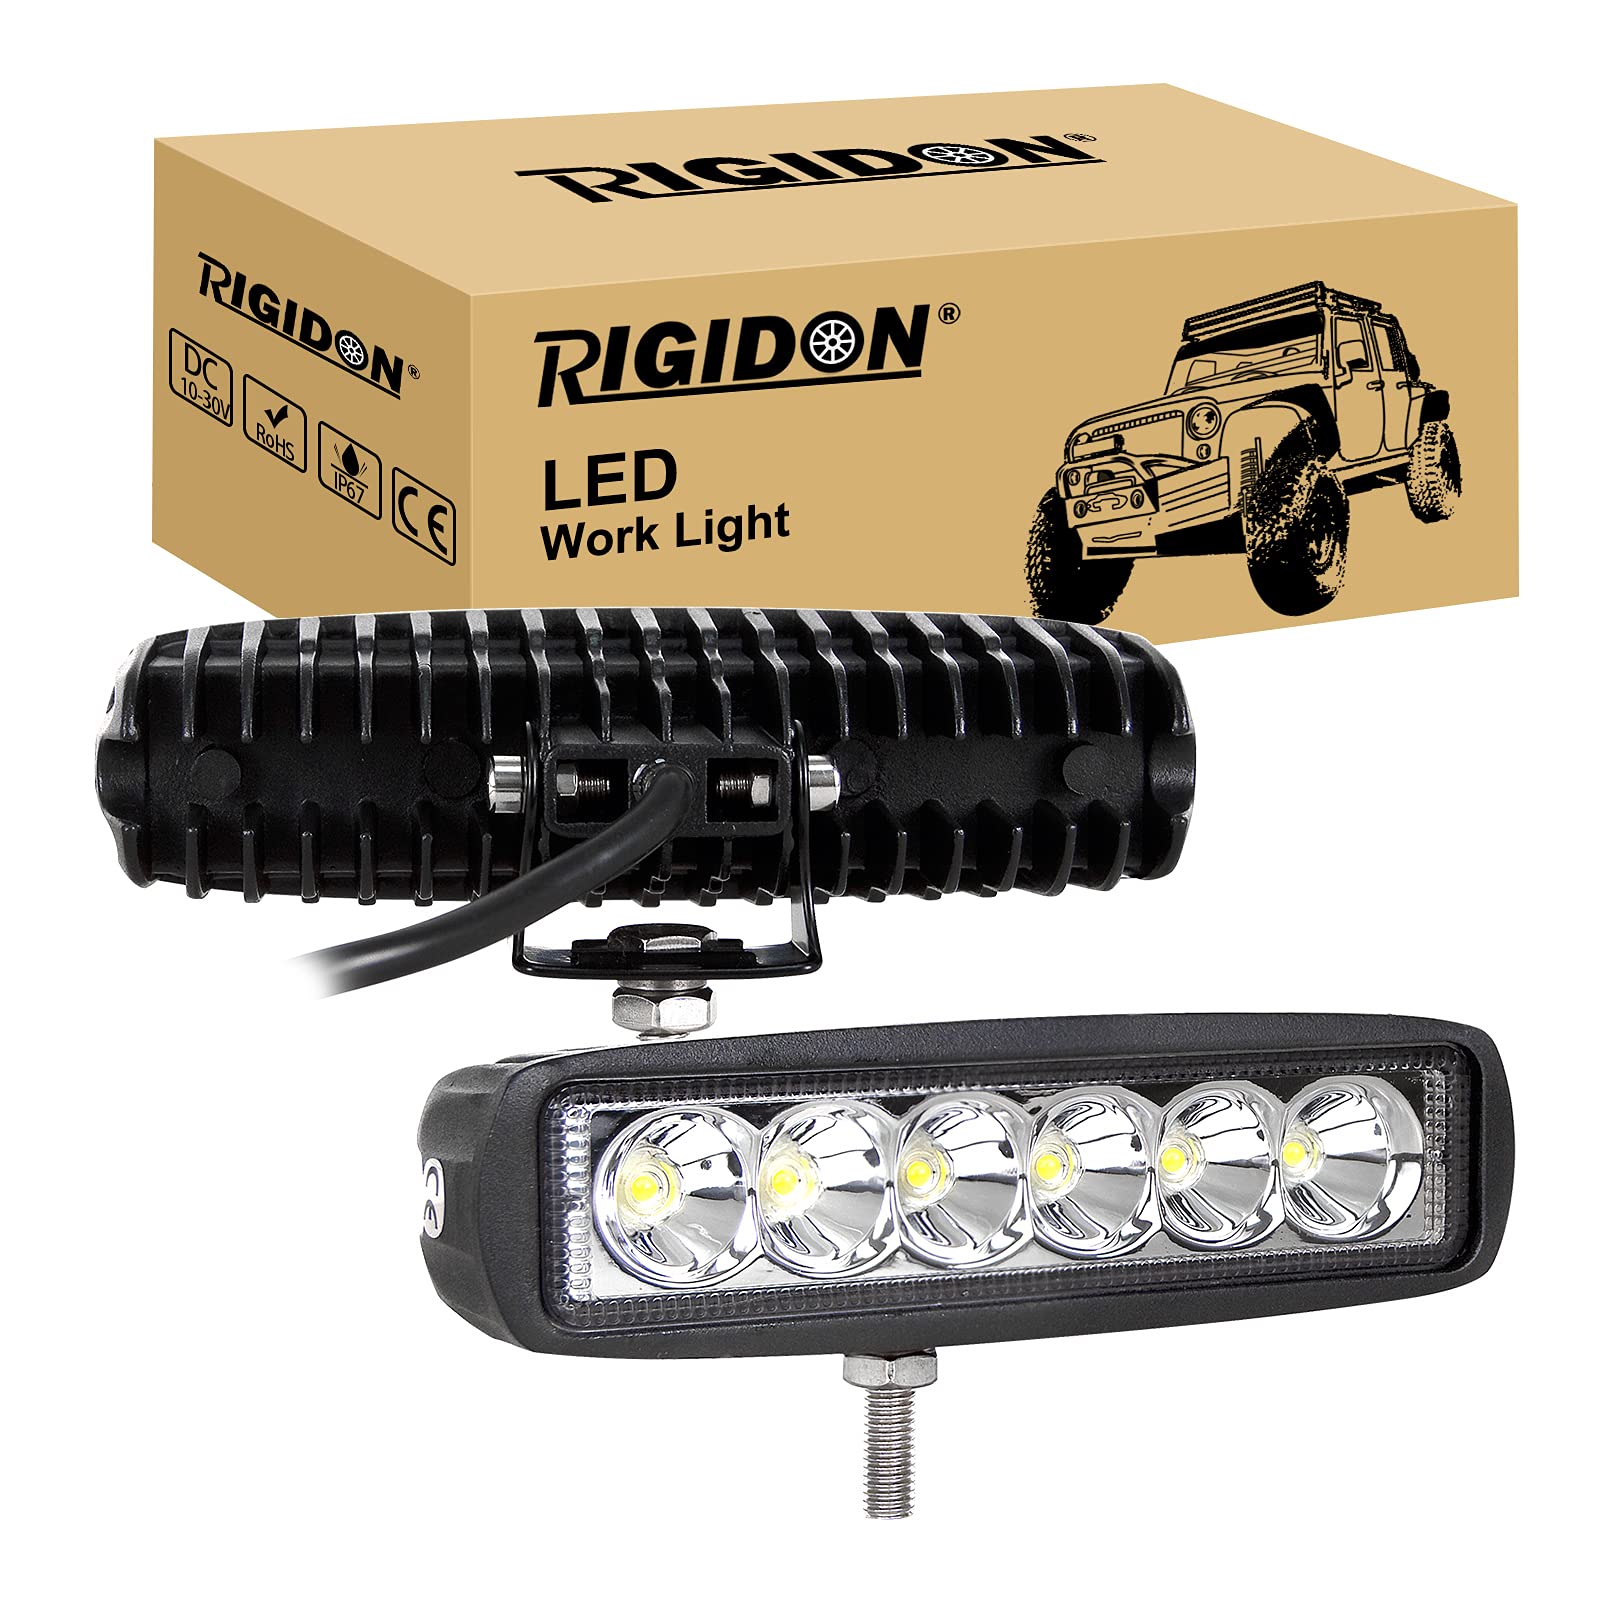 RIGIDON 2 Pcs led lichtleiste, 18W 6 Zoll 15cm Spot Strahler offroad beleuchtung für Auto SUV ATV, Traktor, LKW, 4x4 6000K Weiß led nebelscheinwerfer, led arbeitsscheinwerfer, led arbeitslicht von RIGIDON